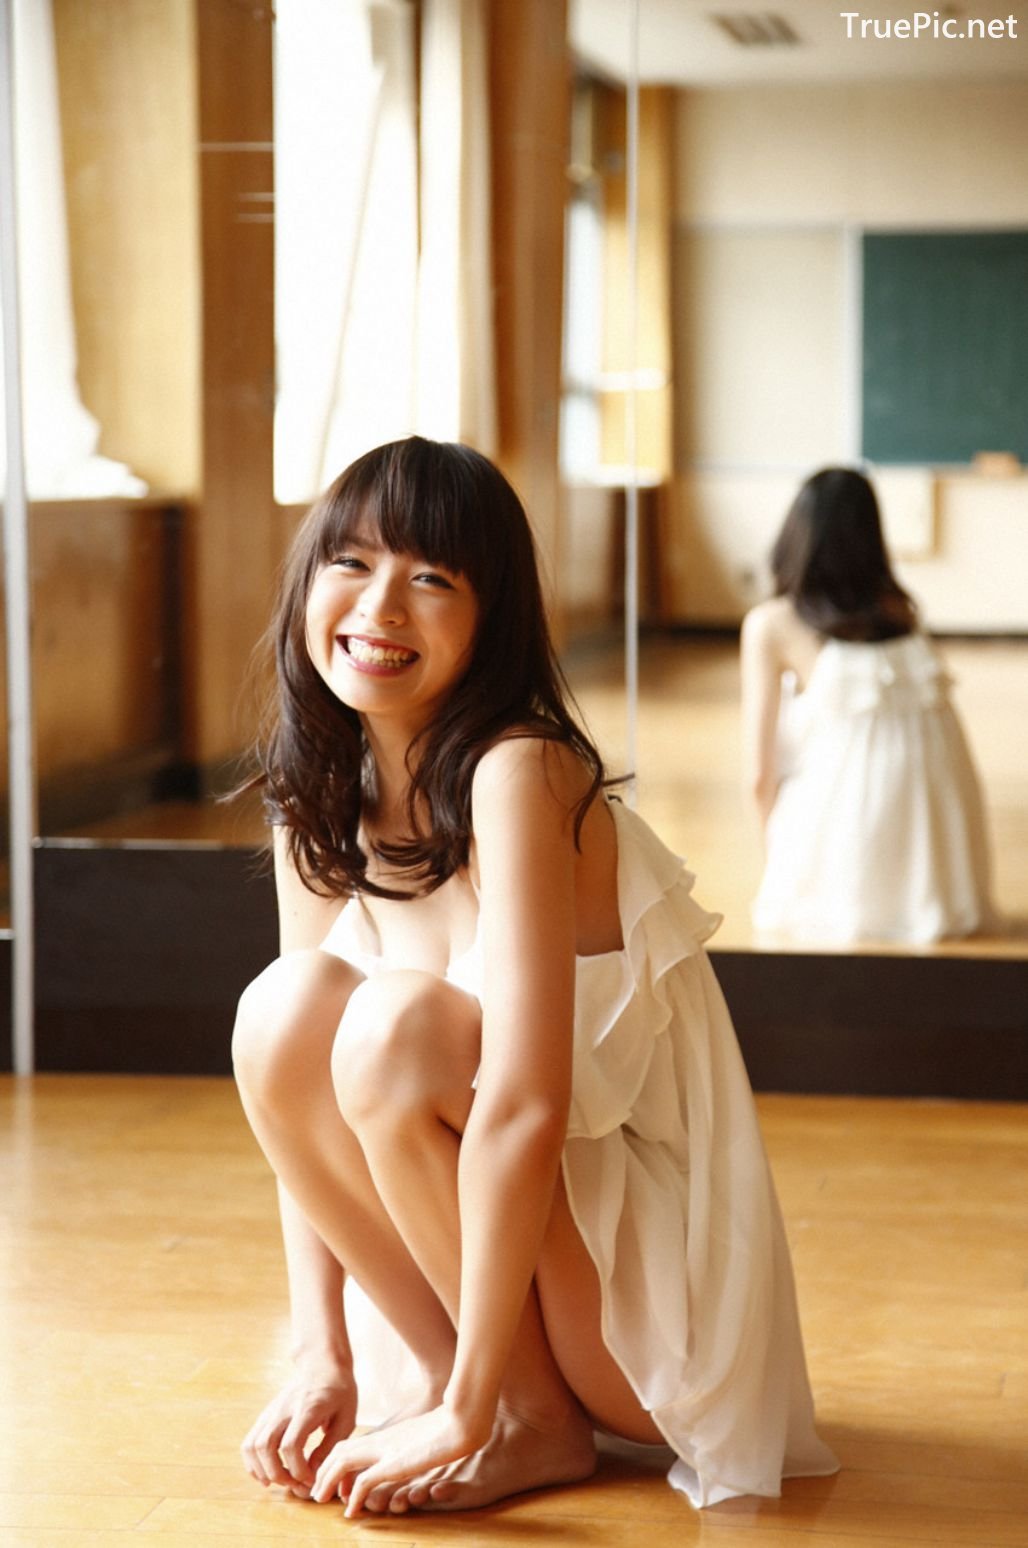 Image-Japanese-Gravure-Idol-Mio-Otani-Photos-Purity-Miss-Magazine-TruePic.net- Picture-15